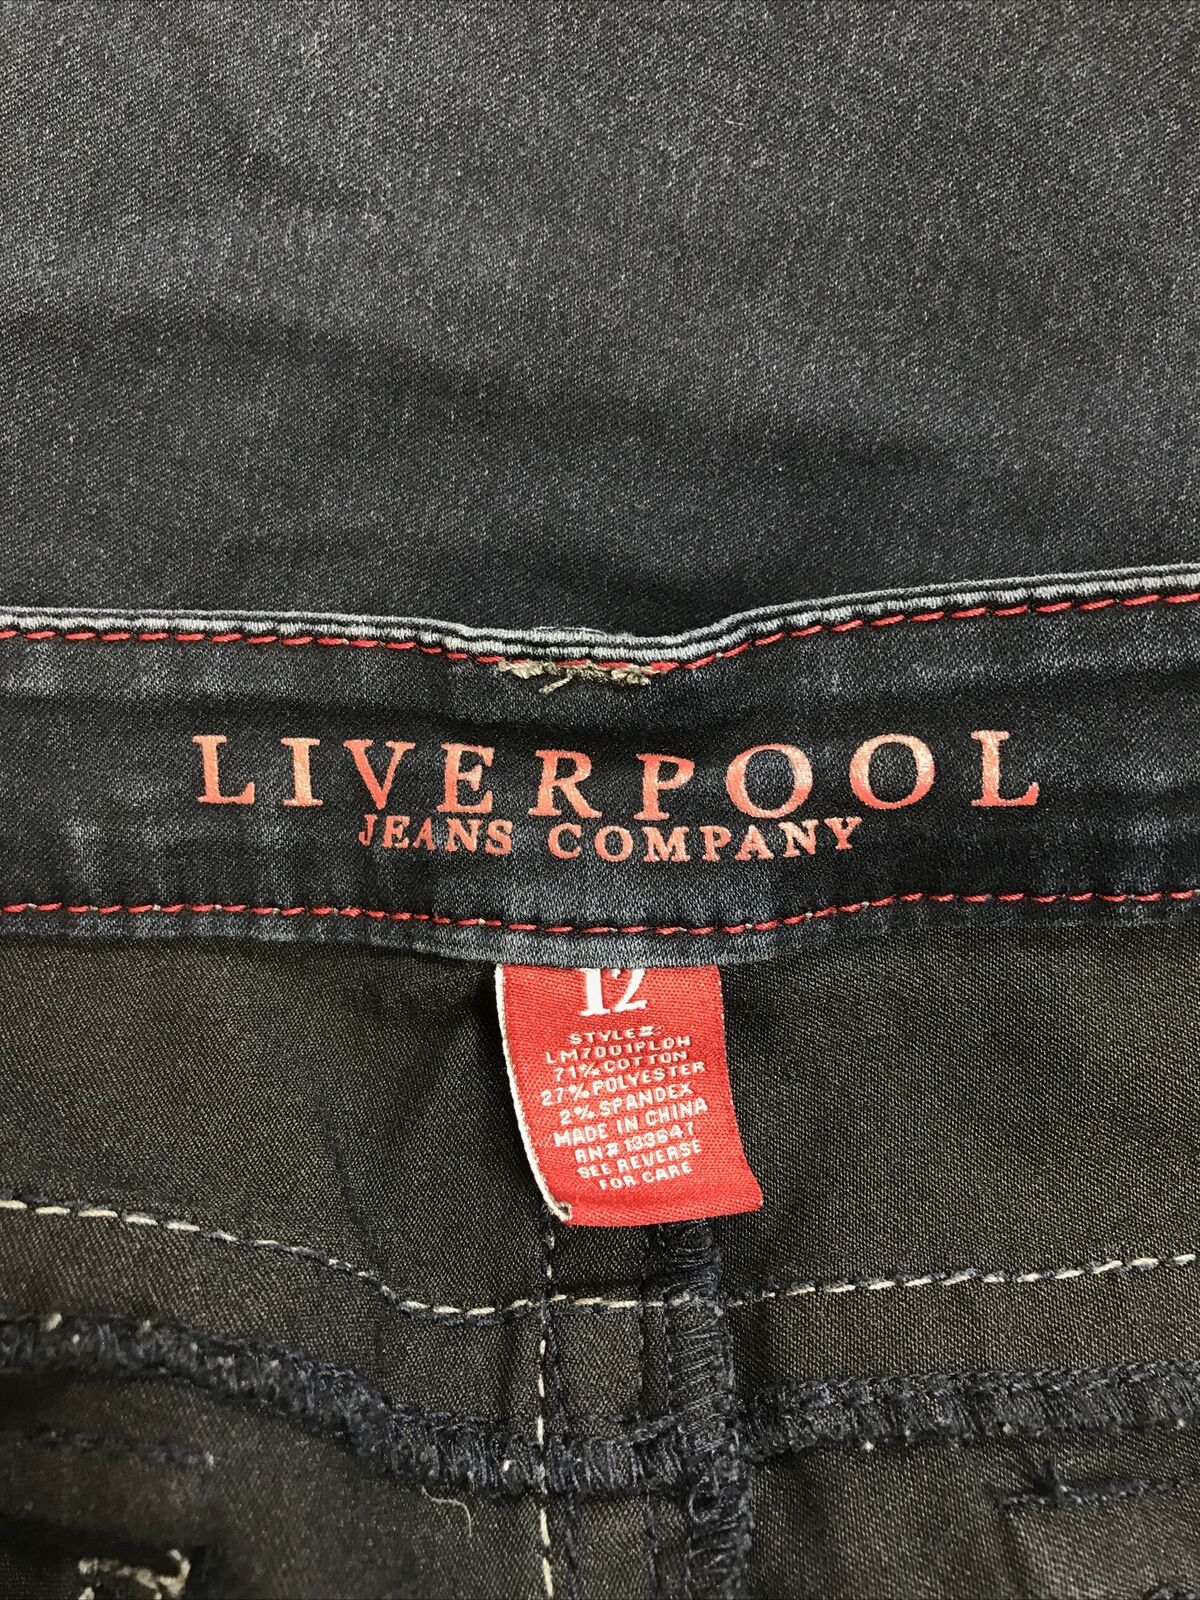 Liverpool Women's Dark Wash Michelle's Carpi Jeans - 12